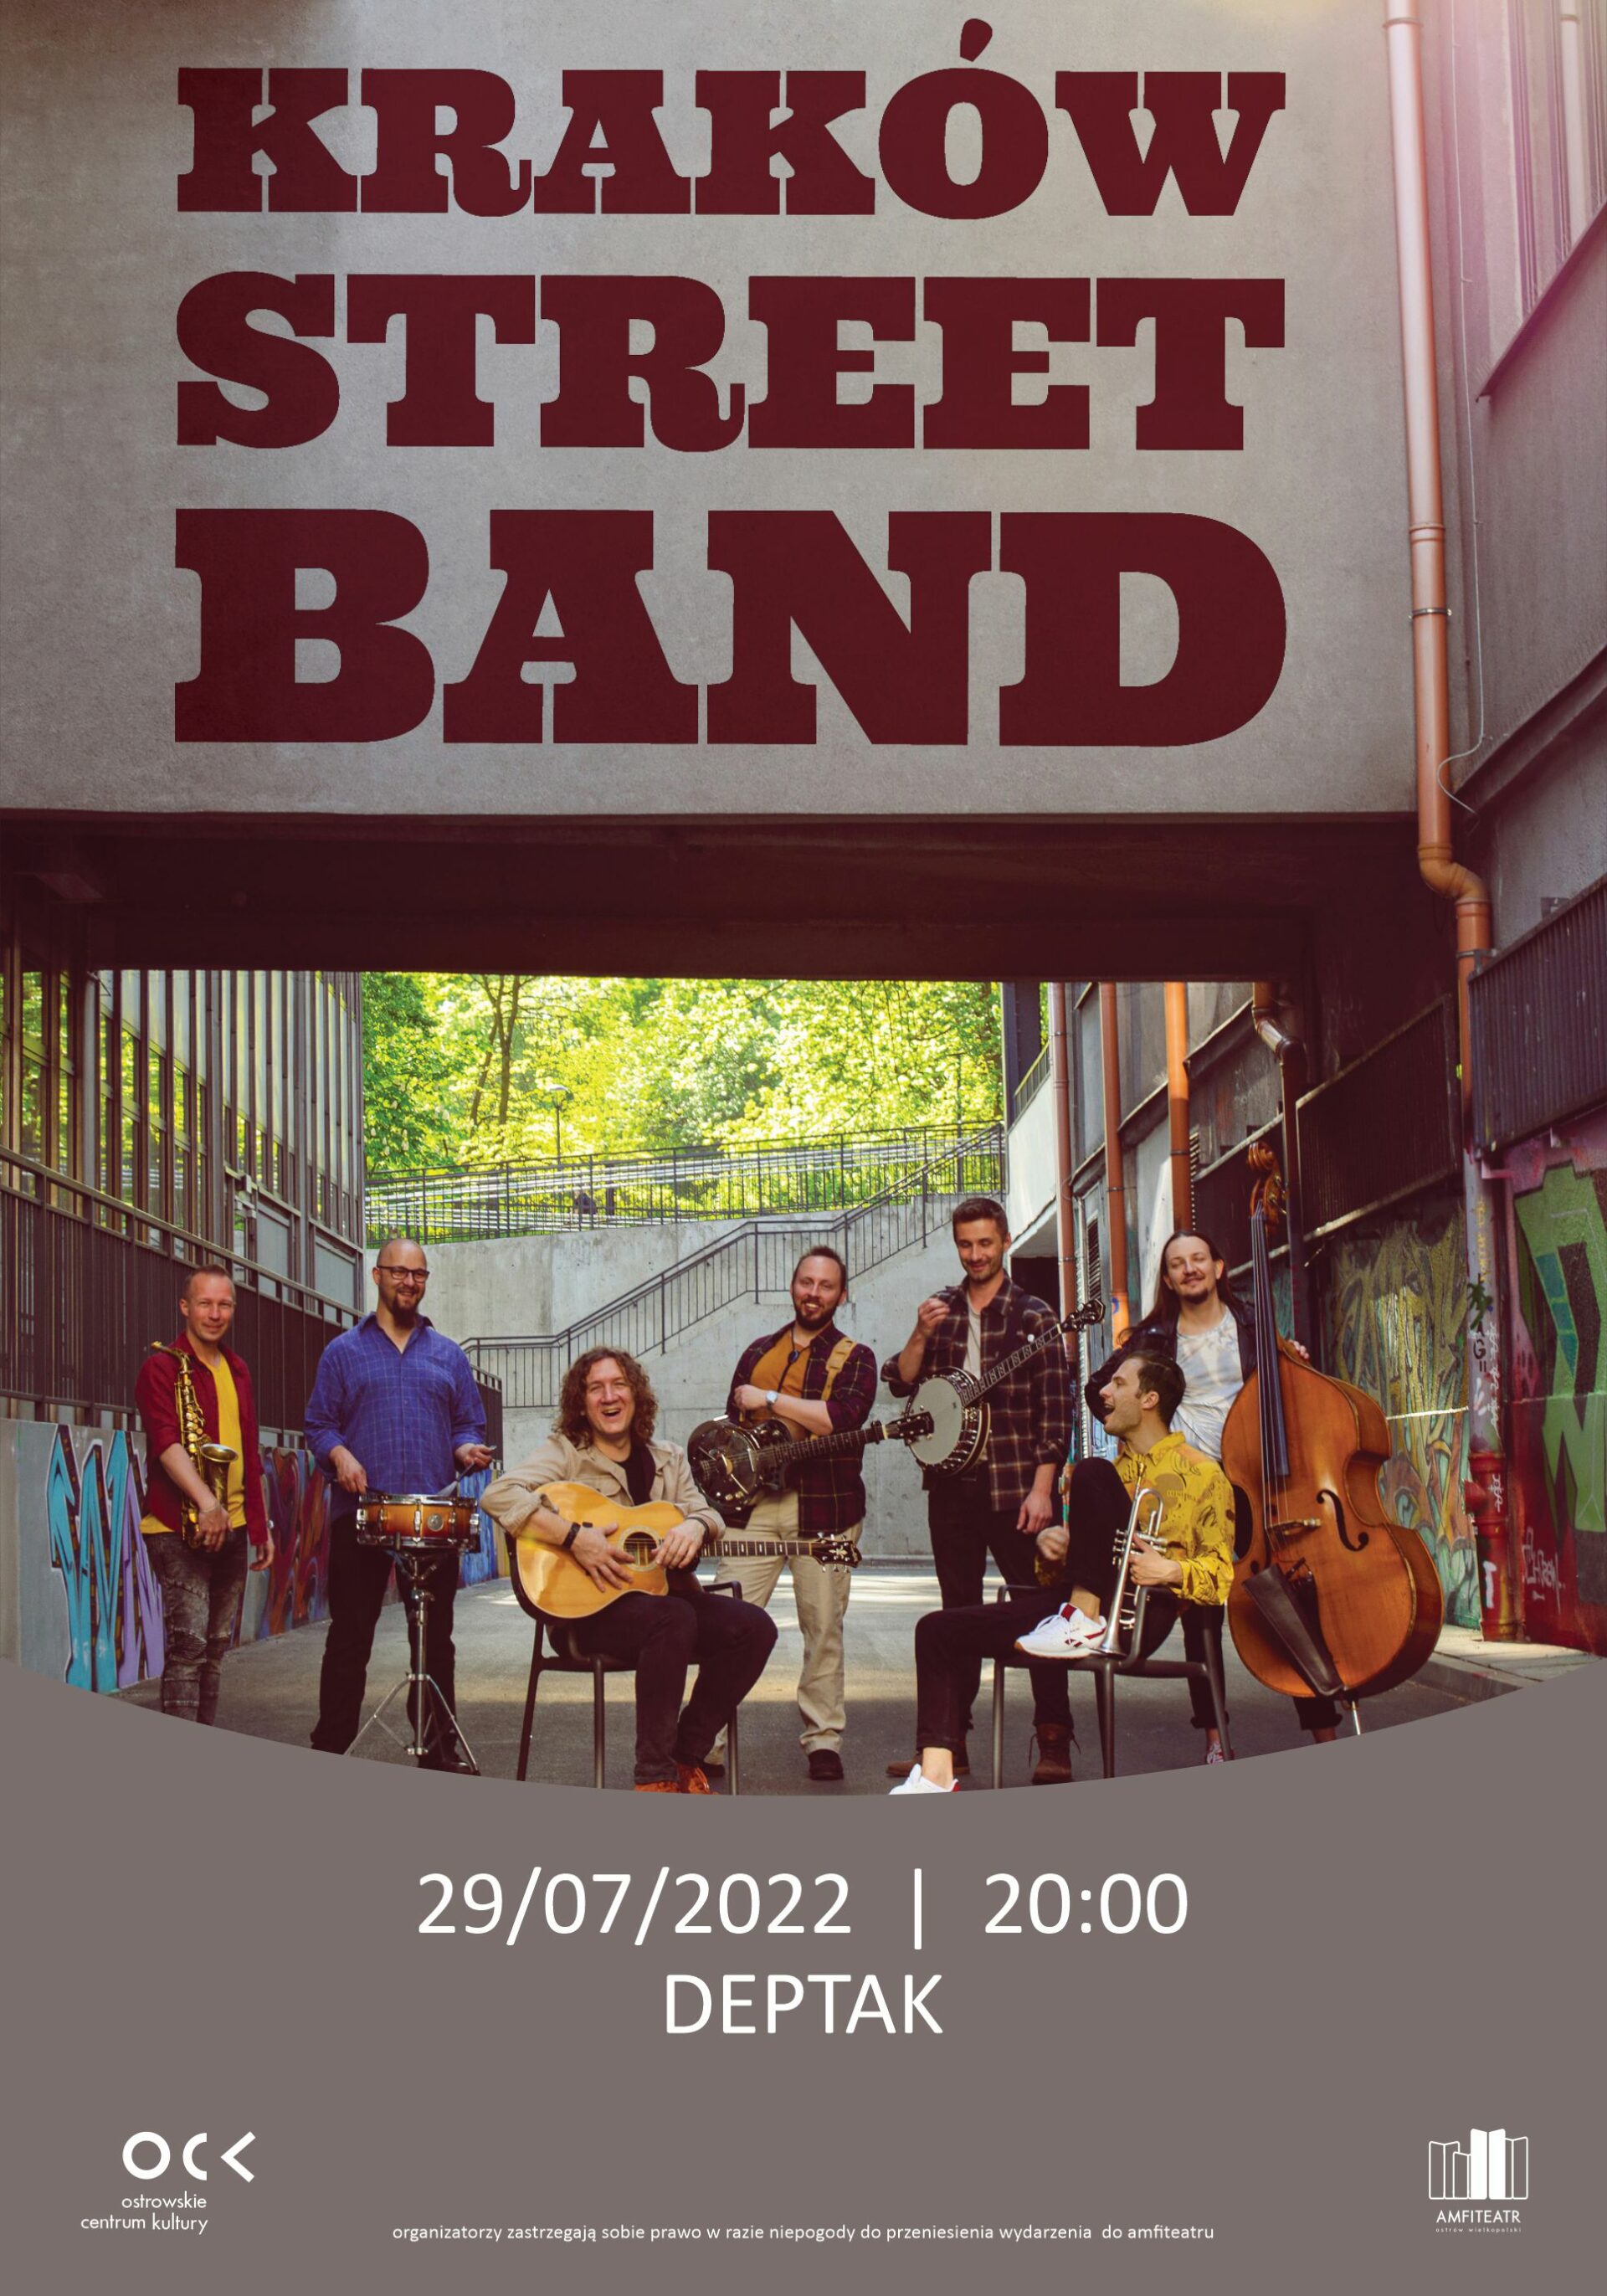 Kraków Street Band | Deptak